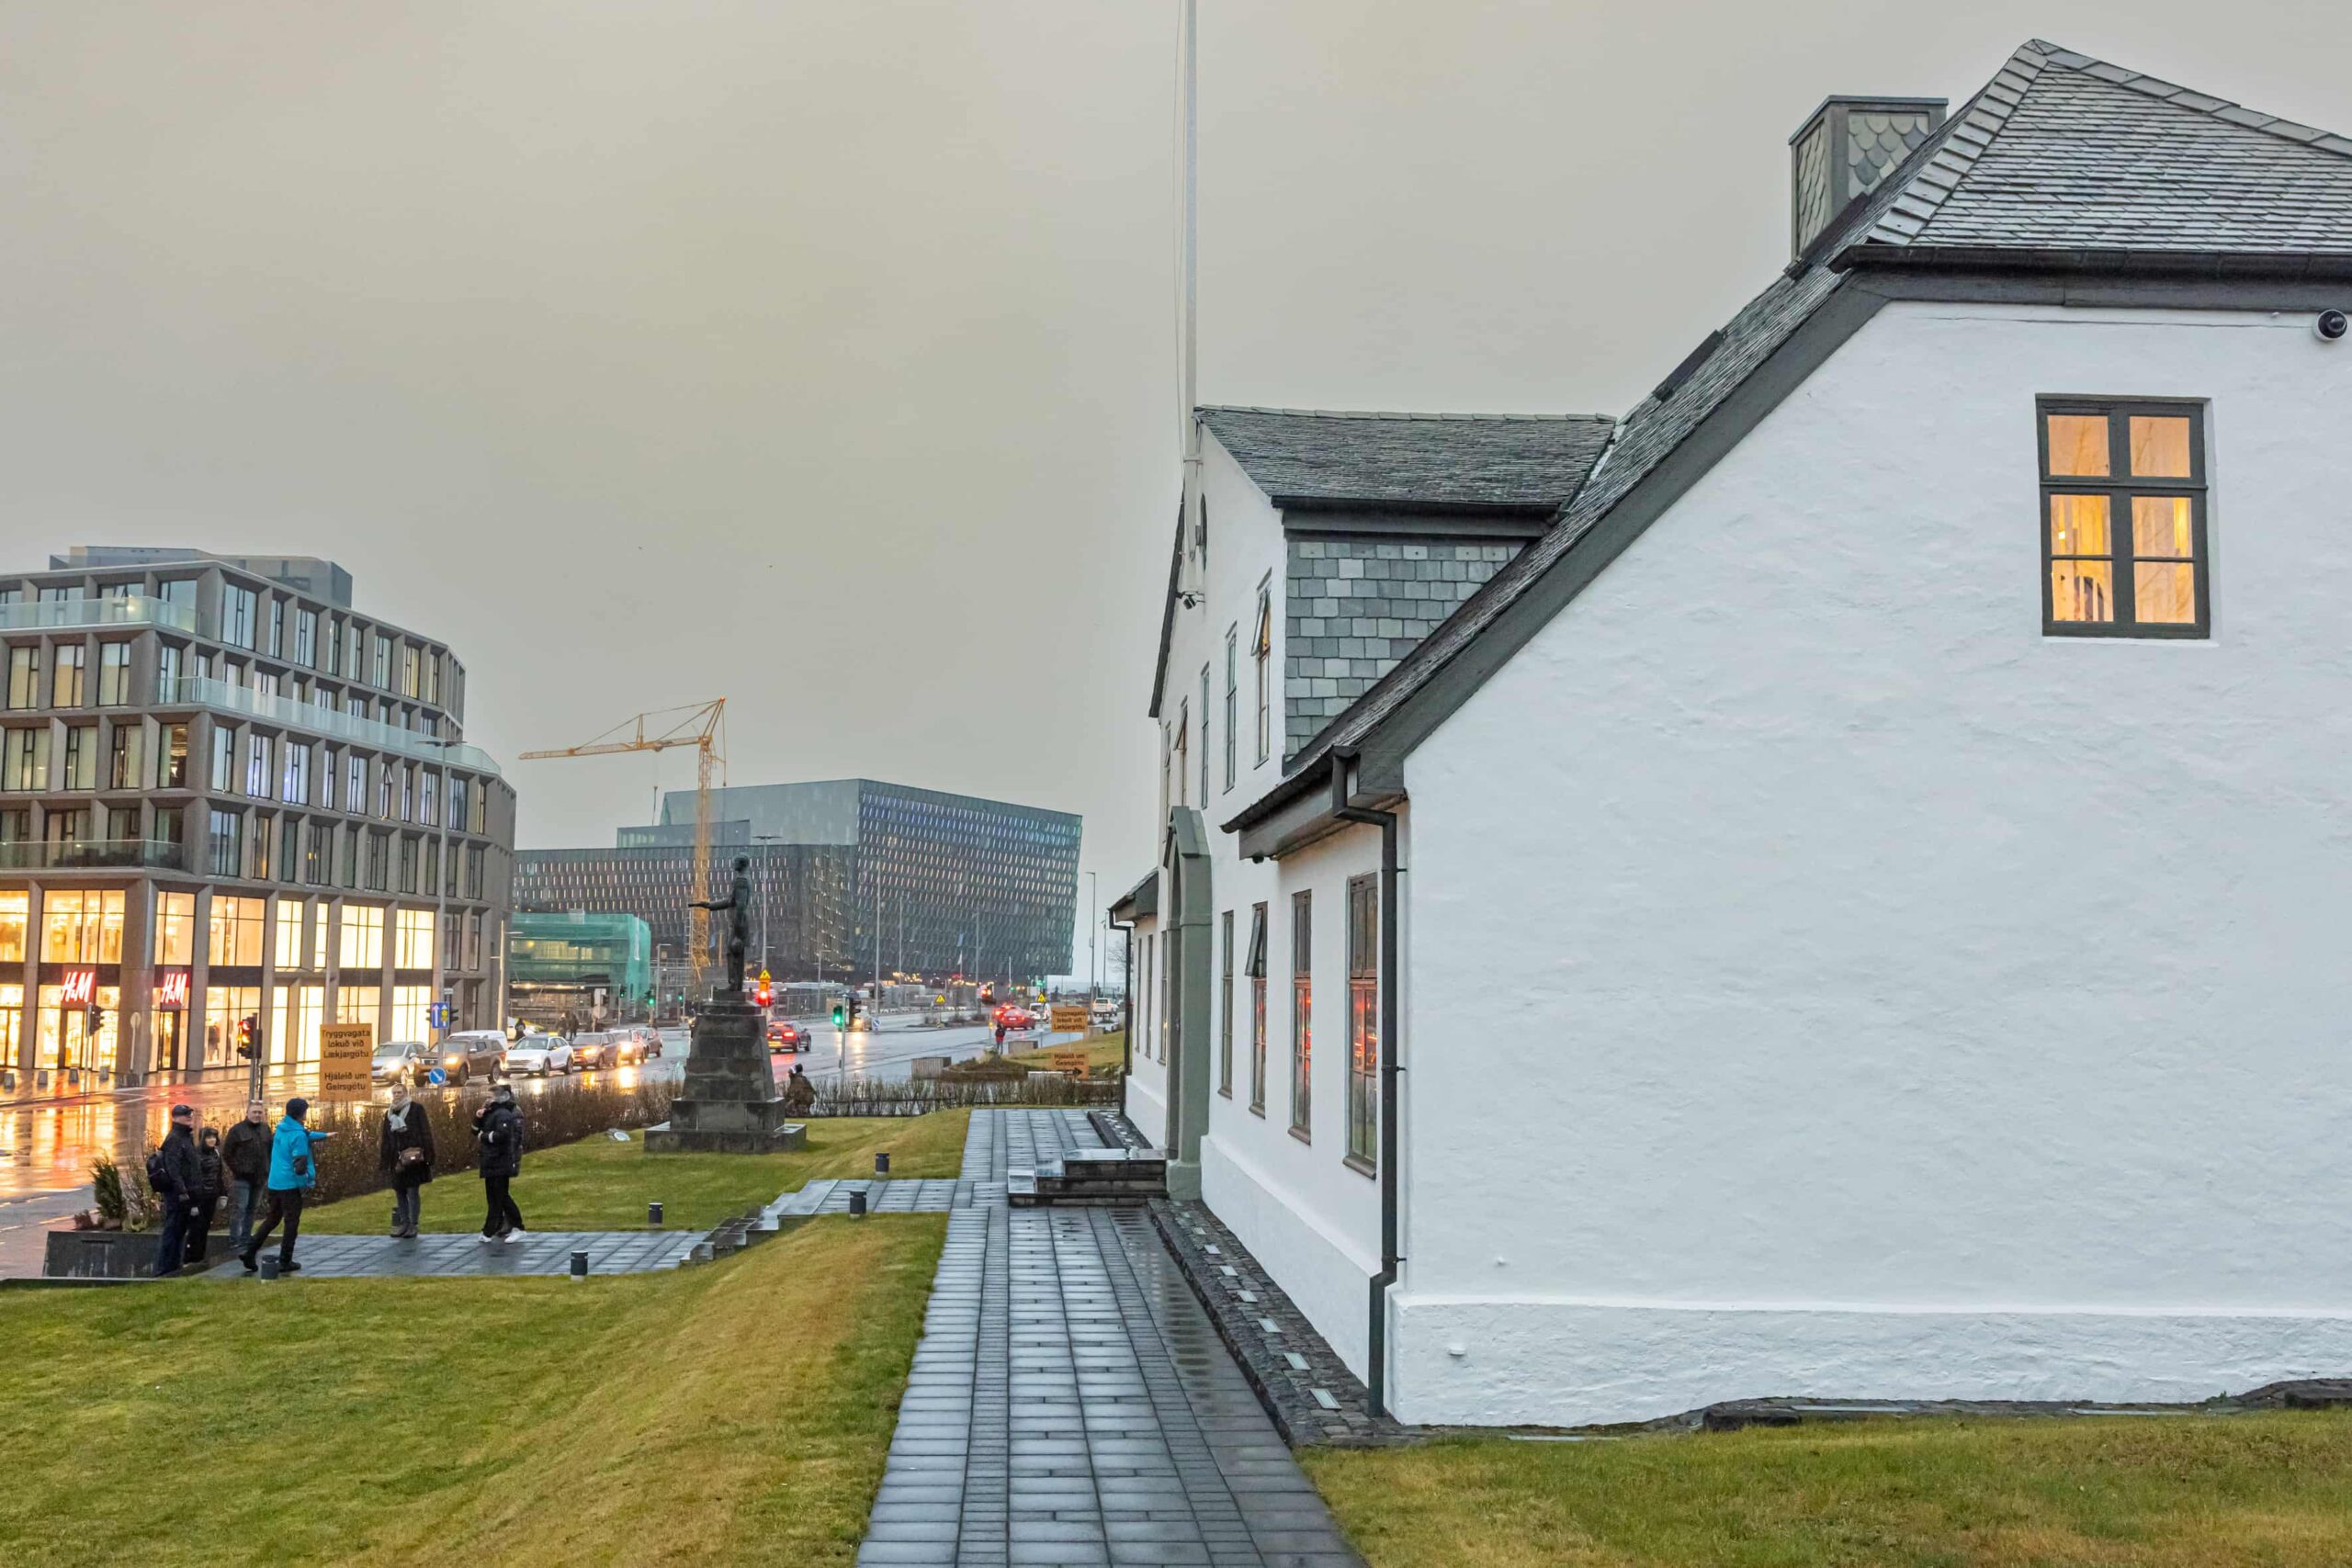 Menntaskolin, the Junior College in it´s historic building in downtown Reykjavik.